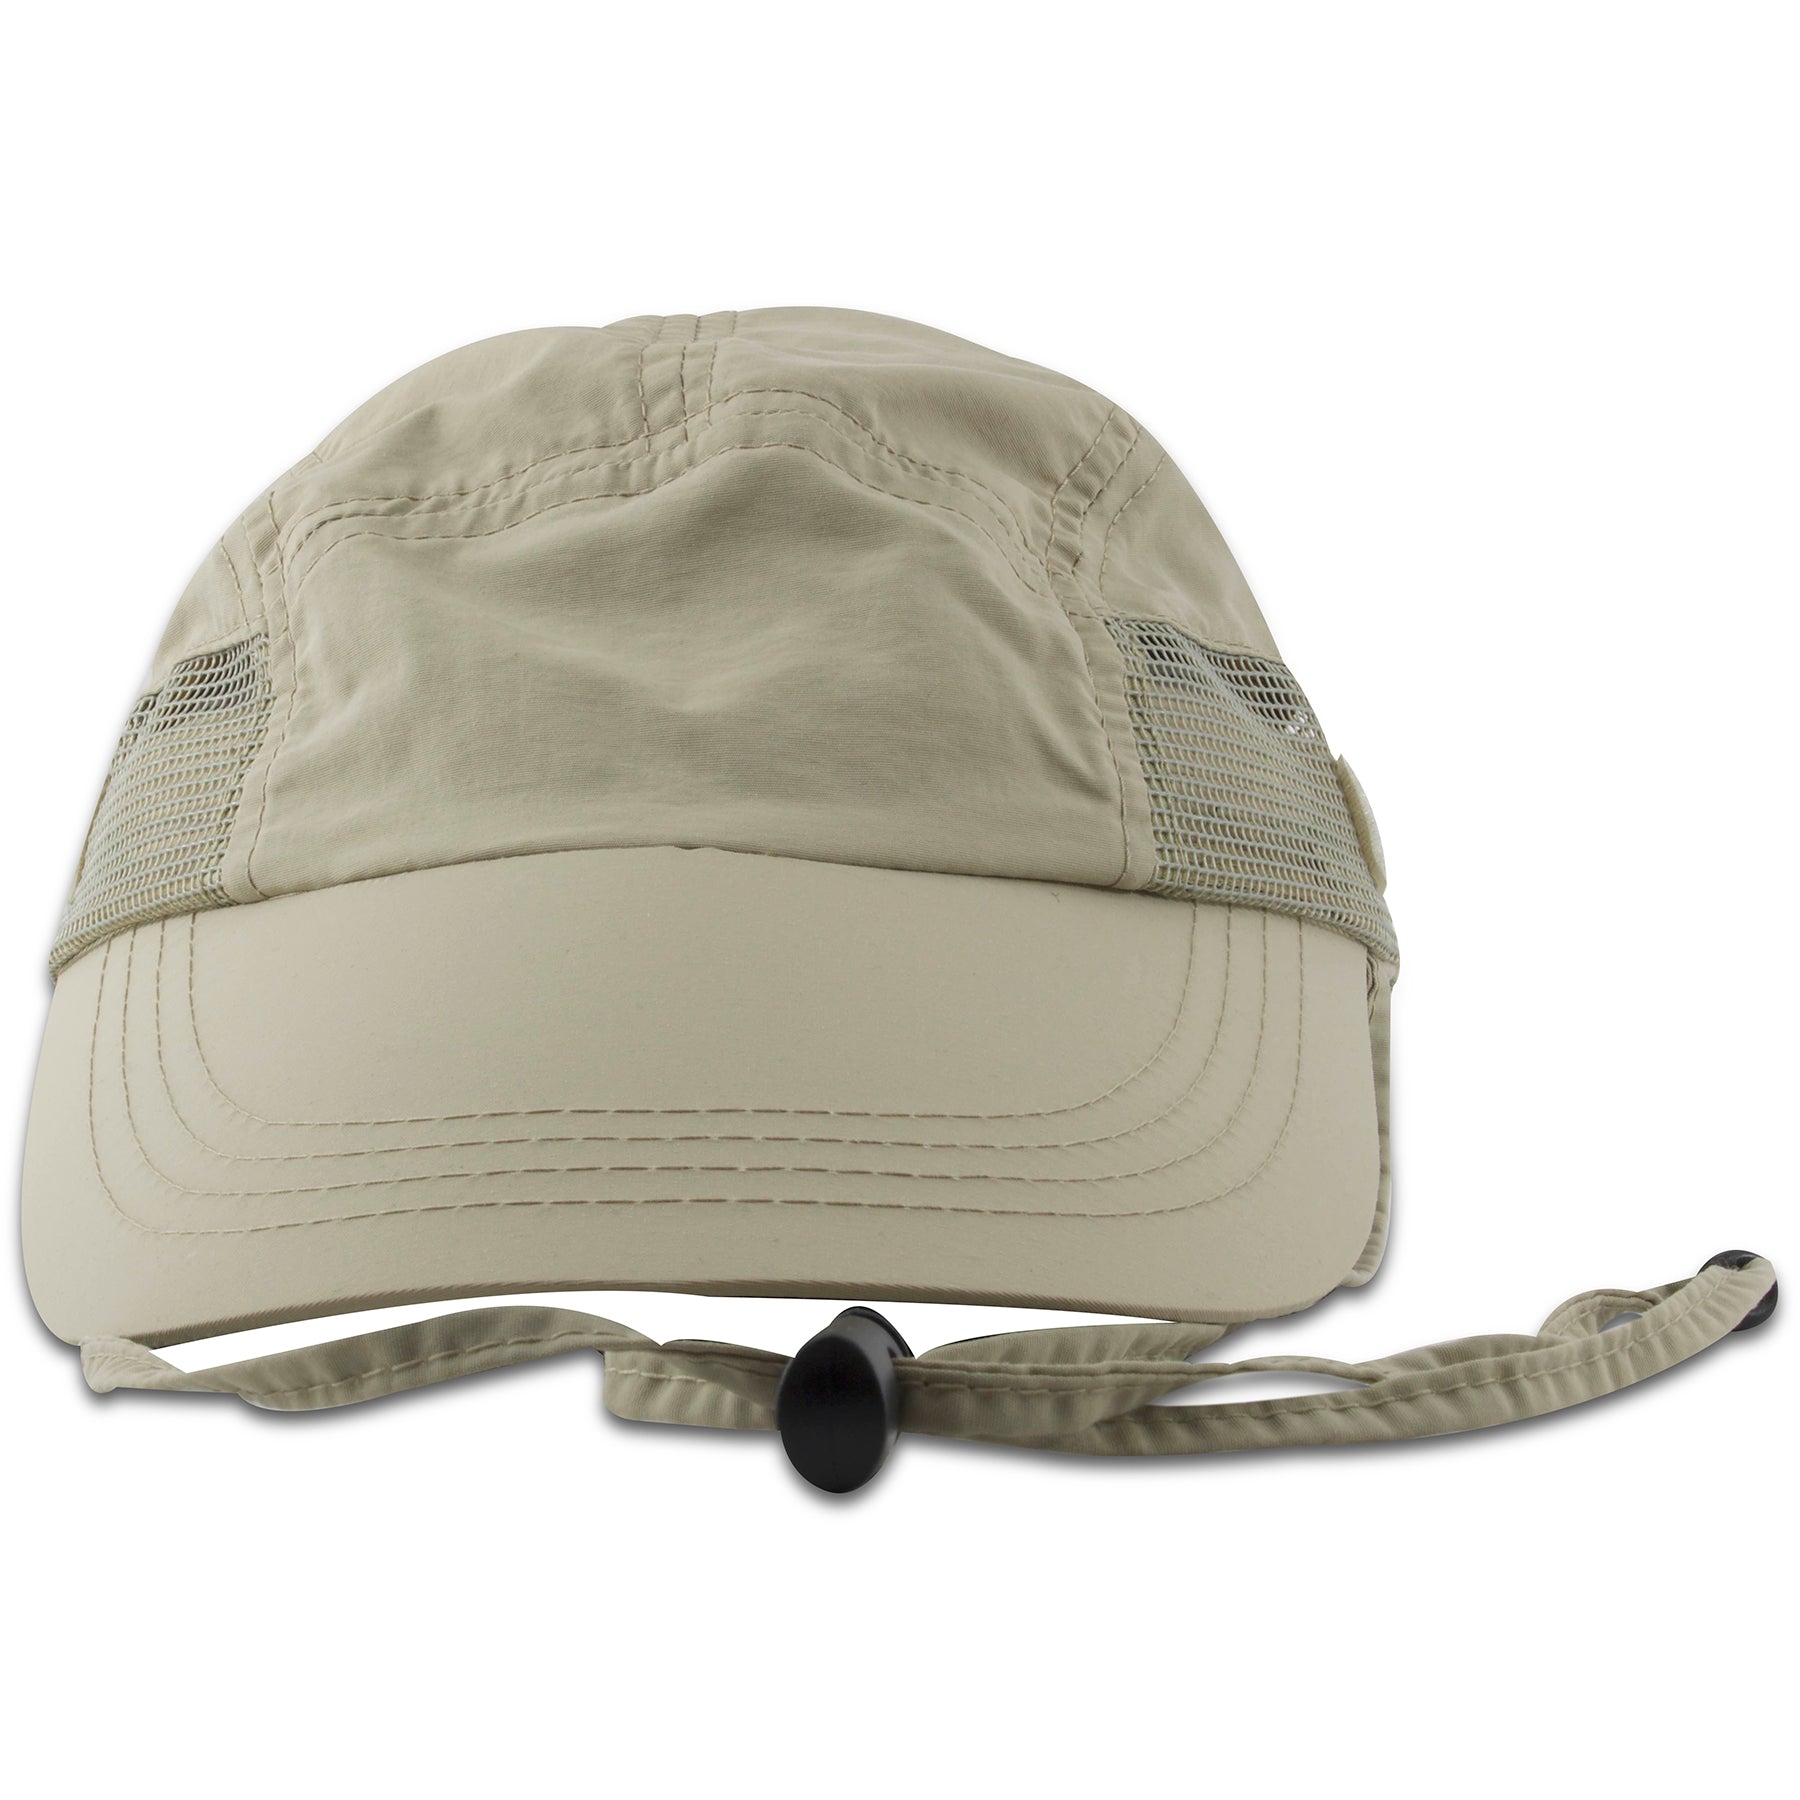 The khaki supplex big brim hat has a long brim and a draping protective neck-piece